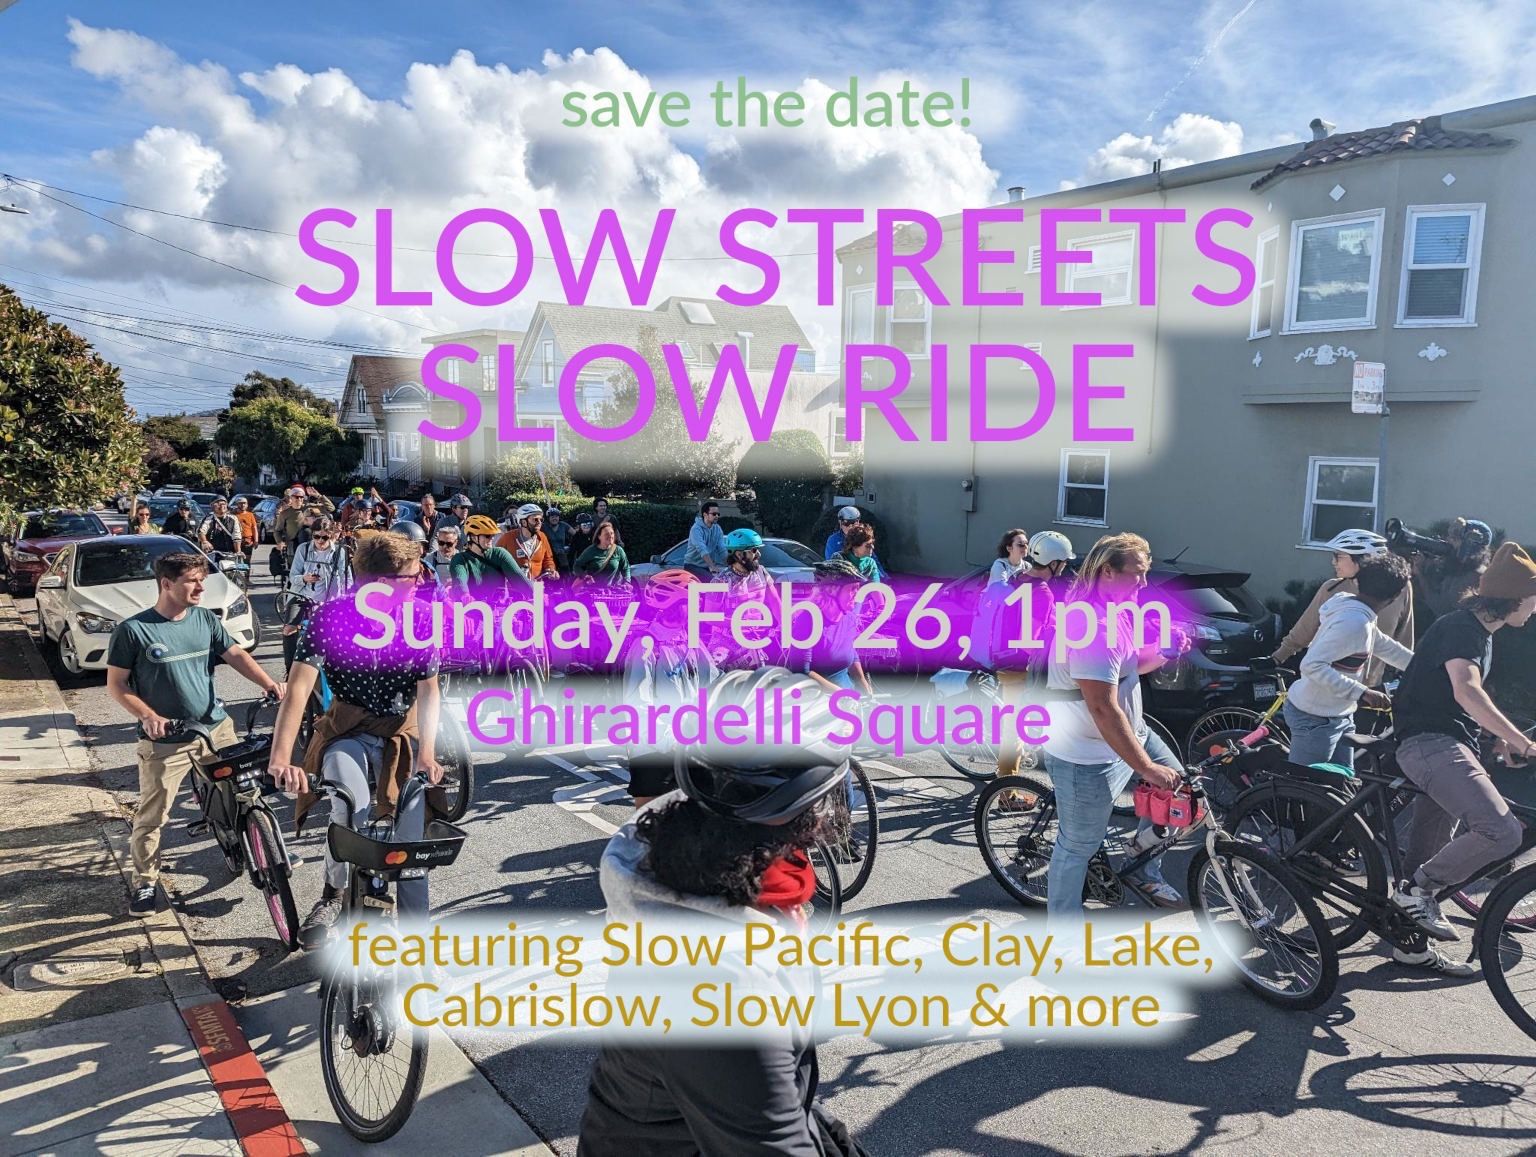 Slow Street Slow Ride- Sunday Feb. 26, 1pm